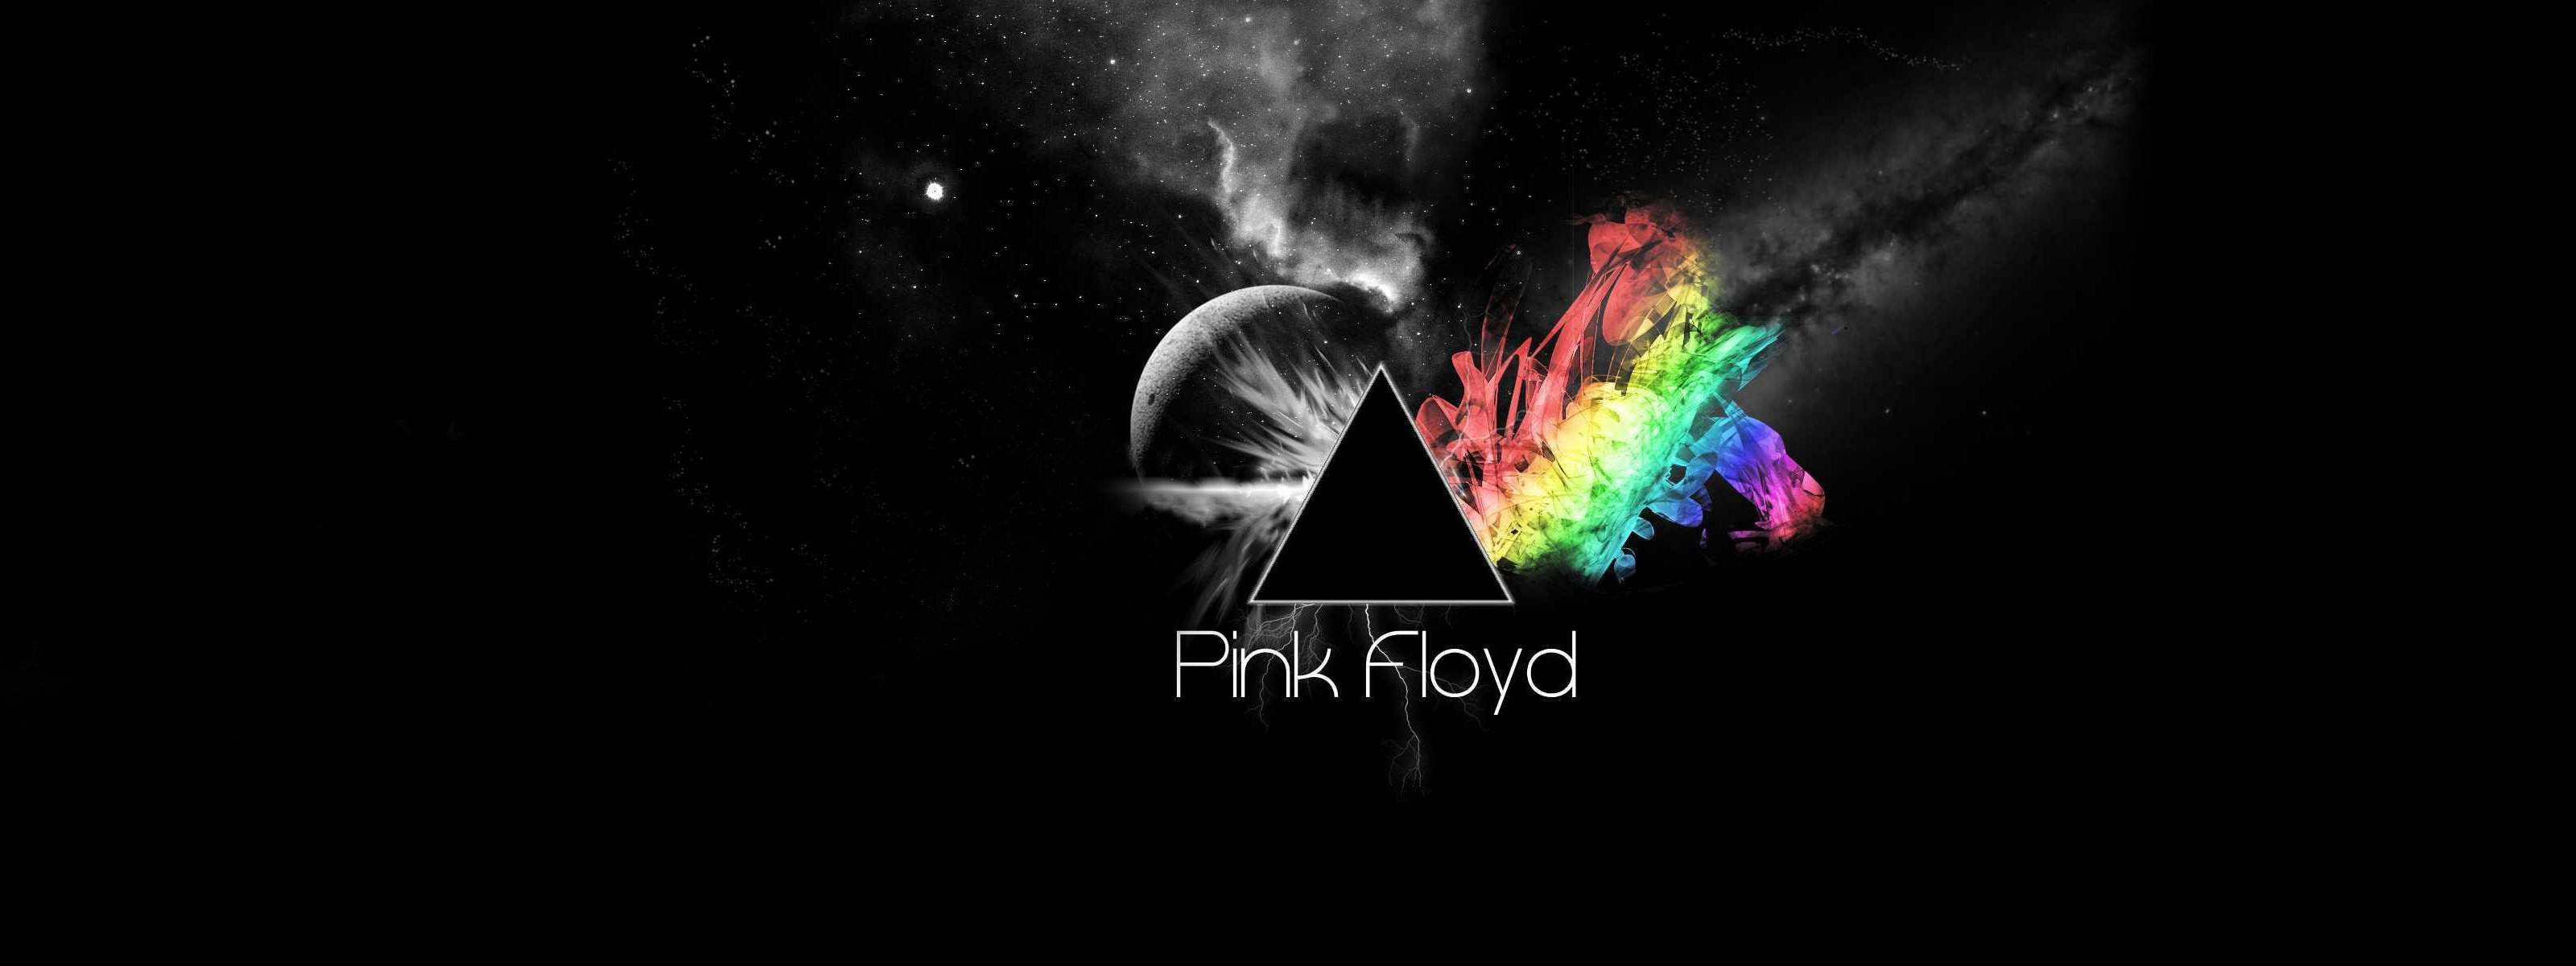 Pink Floyd News The Wall HD Wallpaper